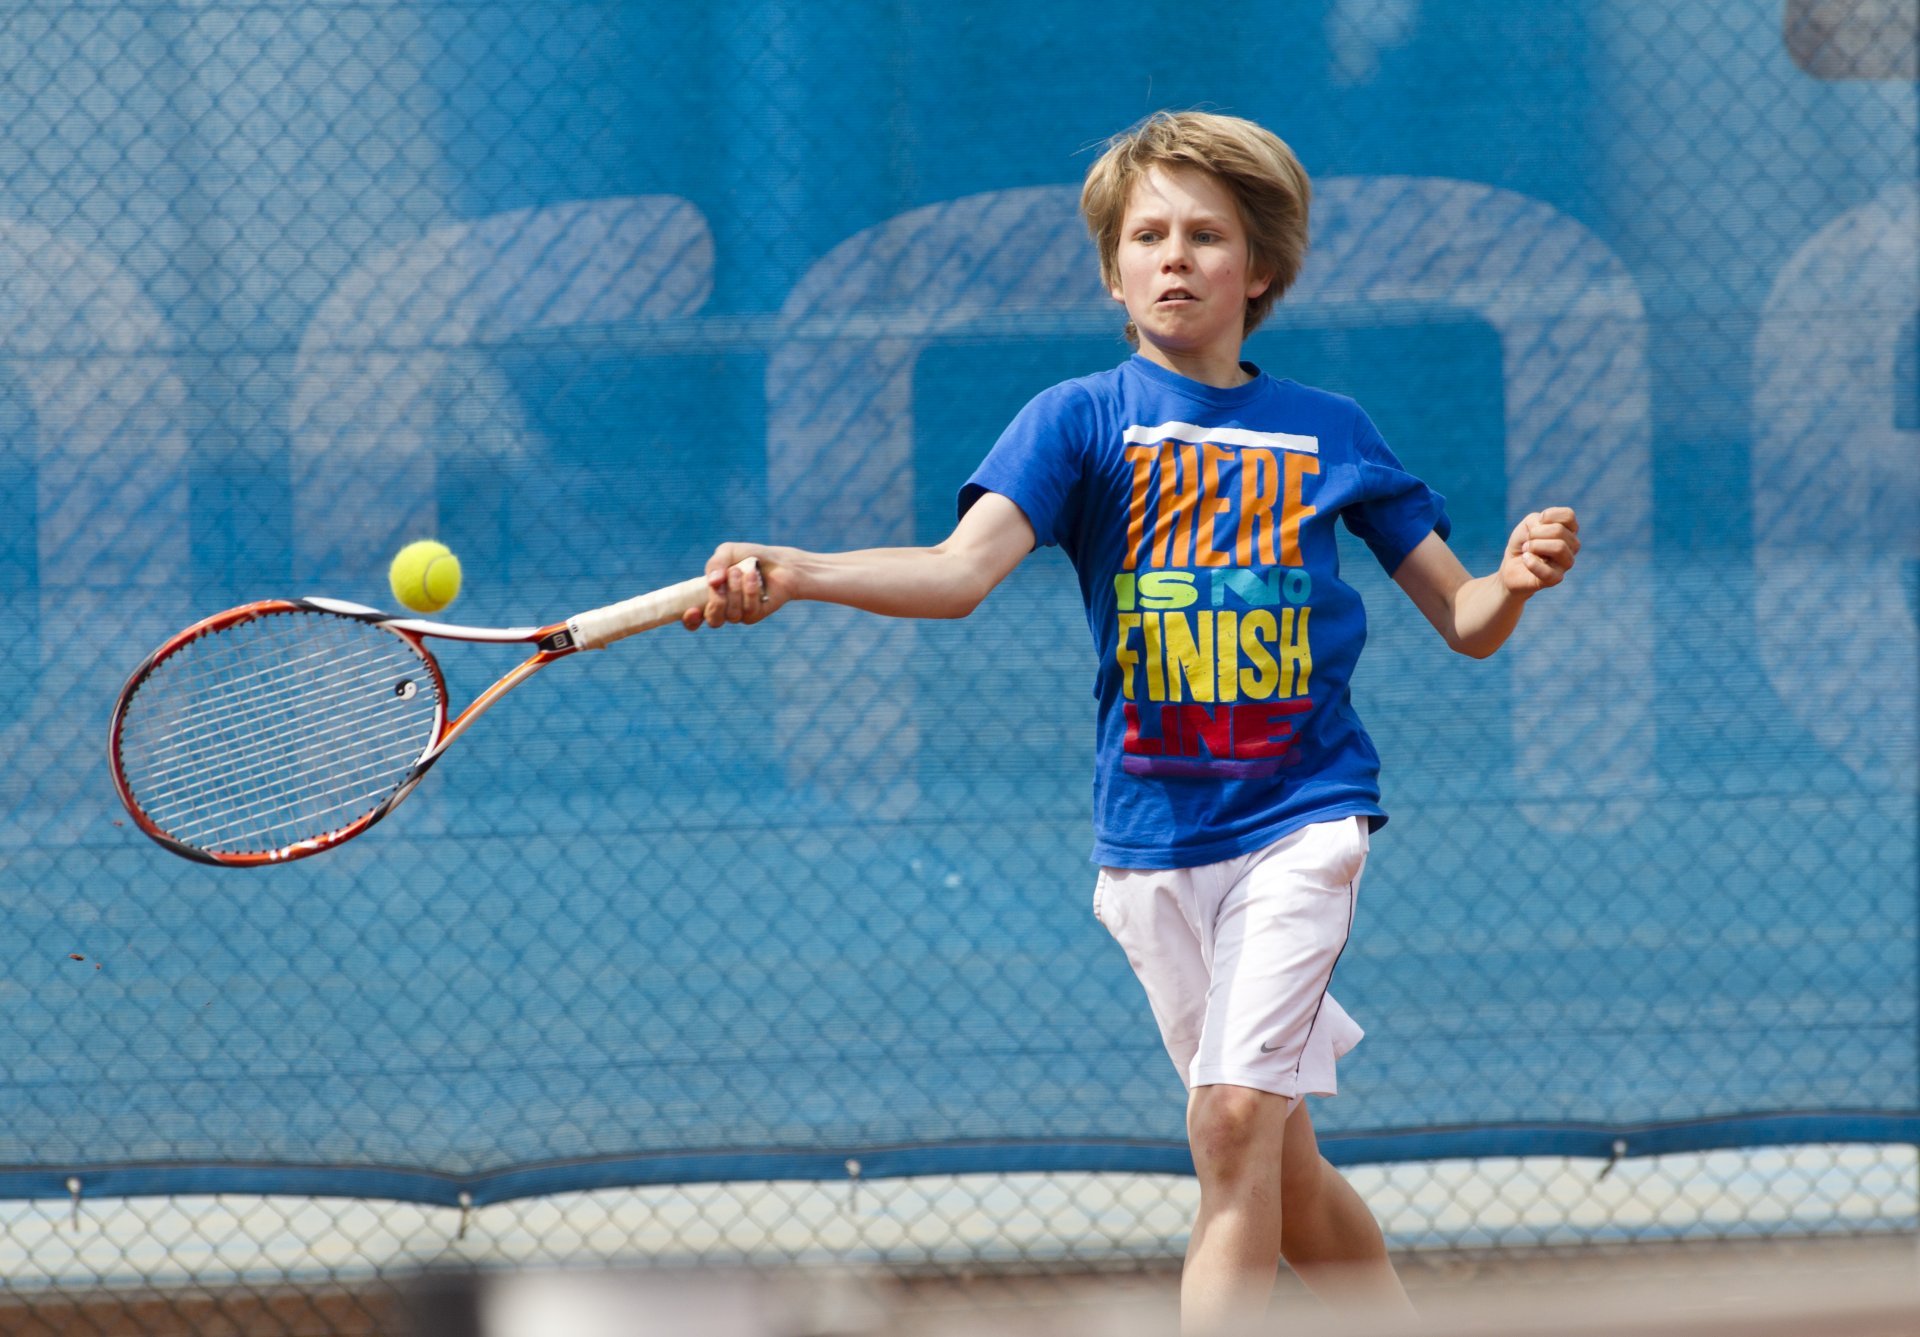 Performance athlétique – Circuits: Tennis – Vitesse (11-15 ans)